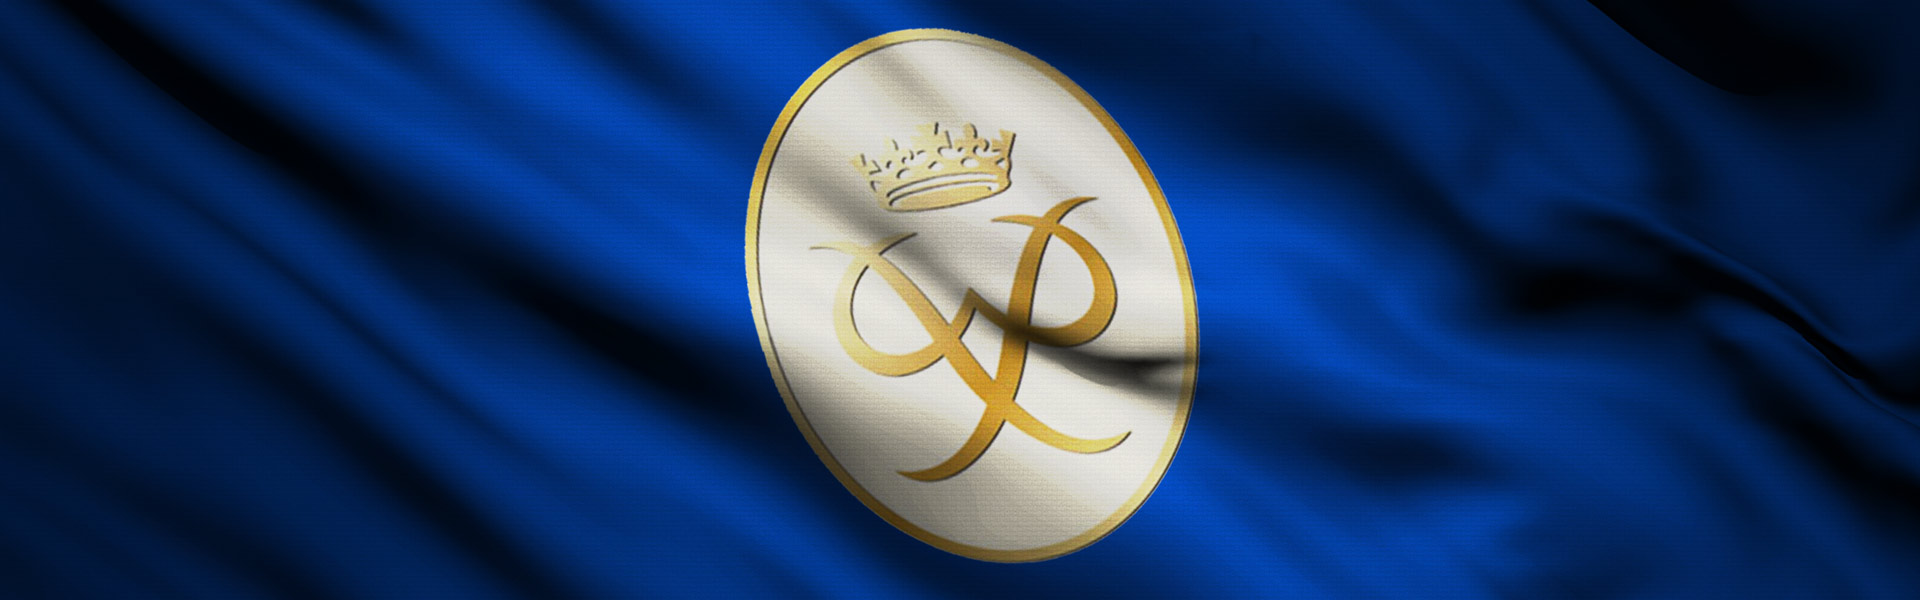 duke of edinburgh gold award logo printed on blue farbric